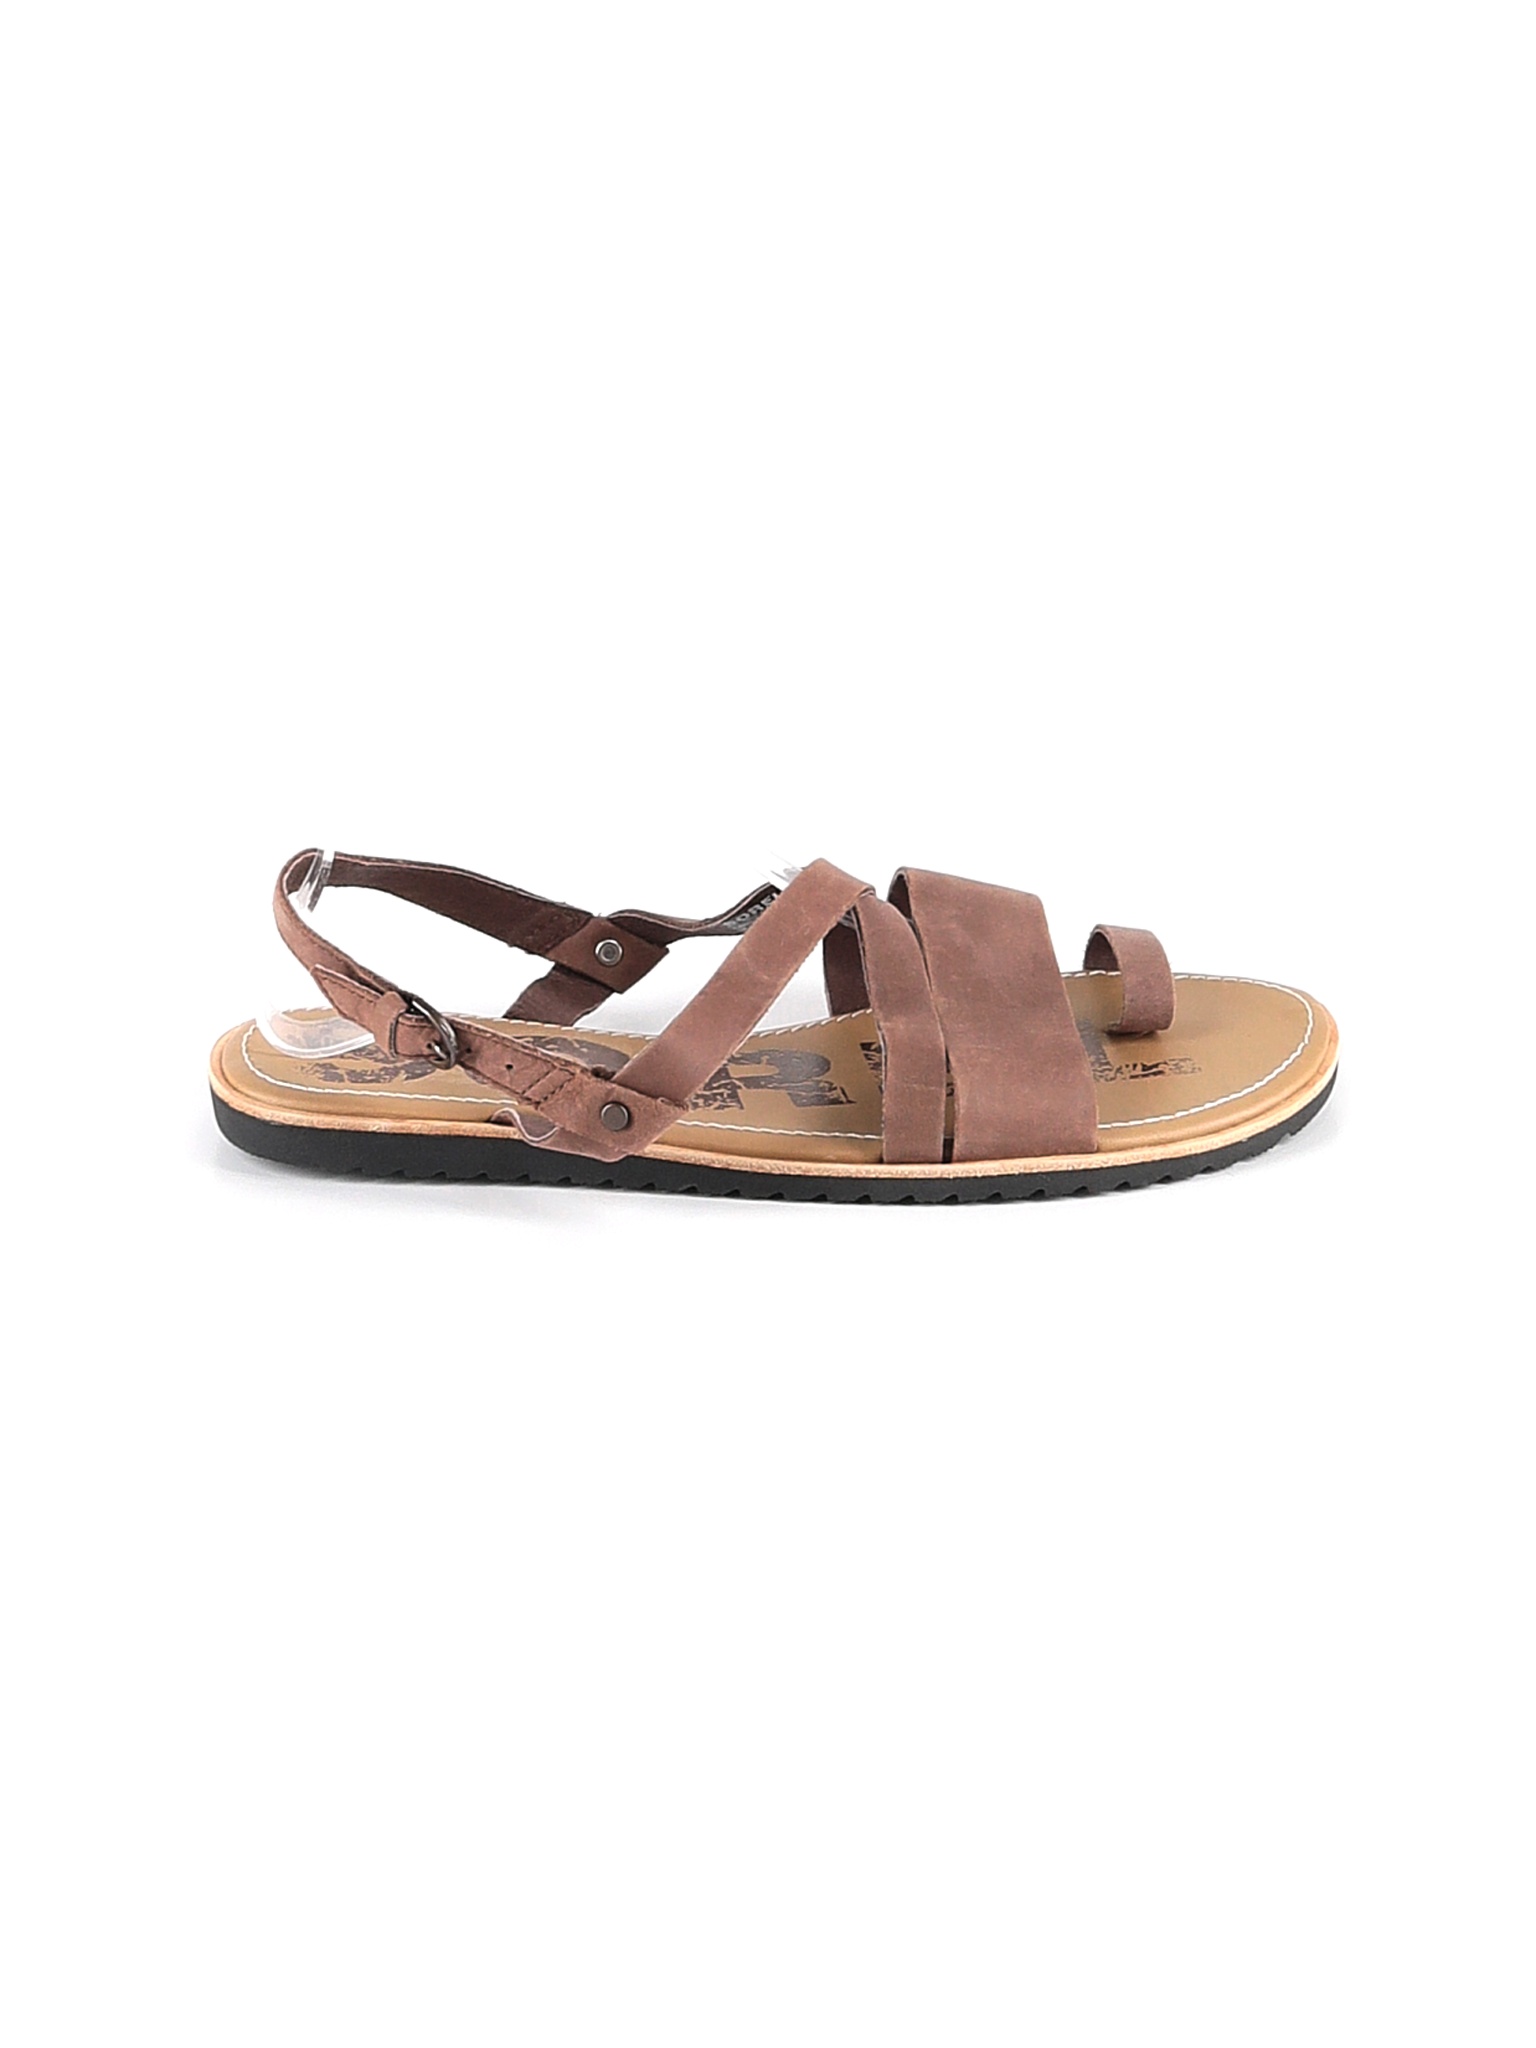 Sorel Women Brown Sandals US 12 | eBay